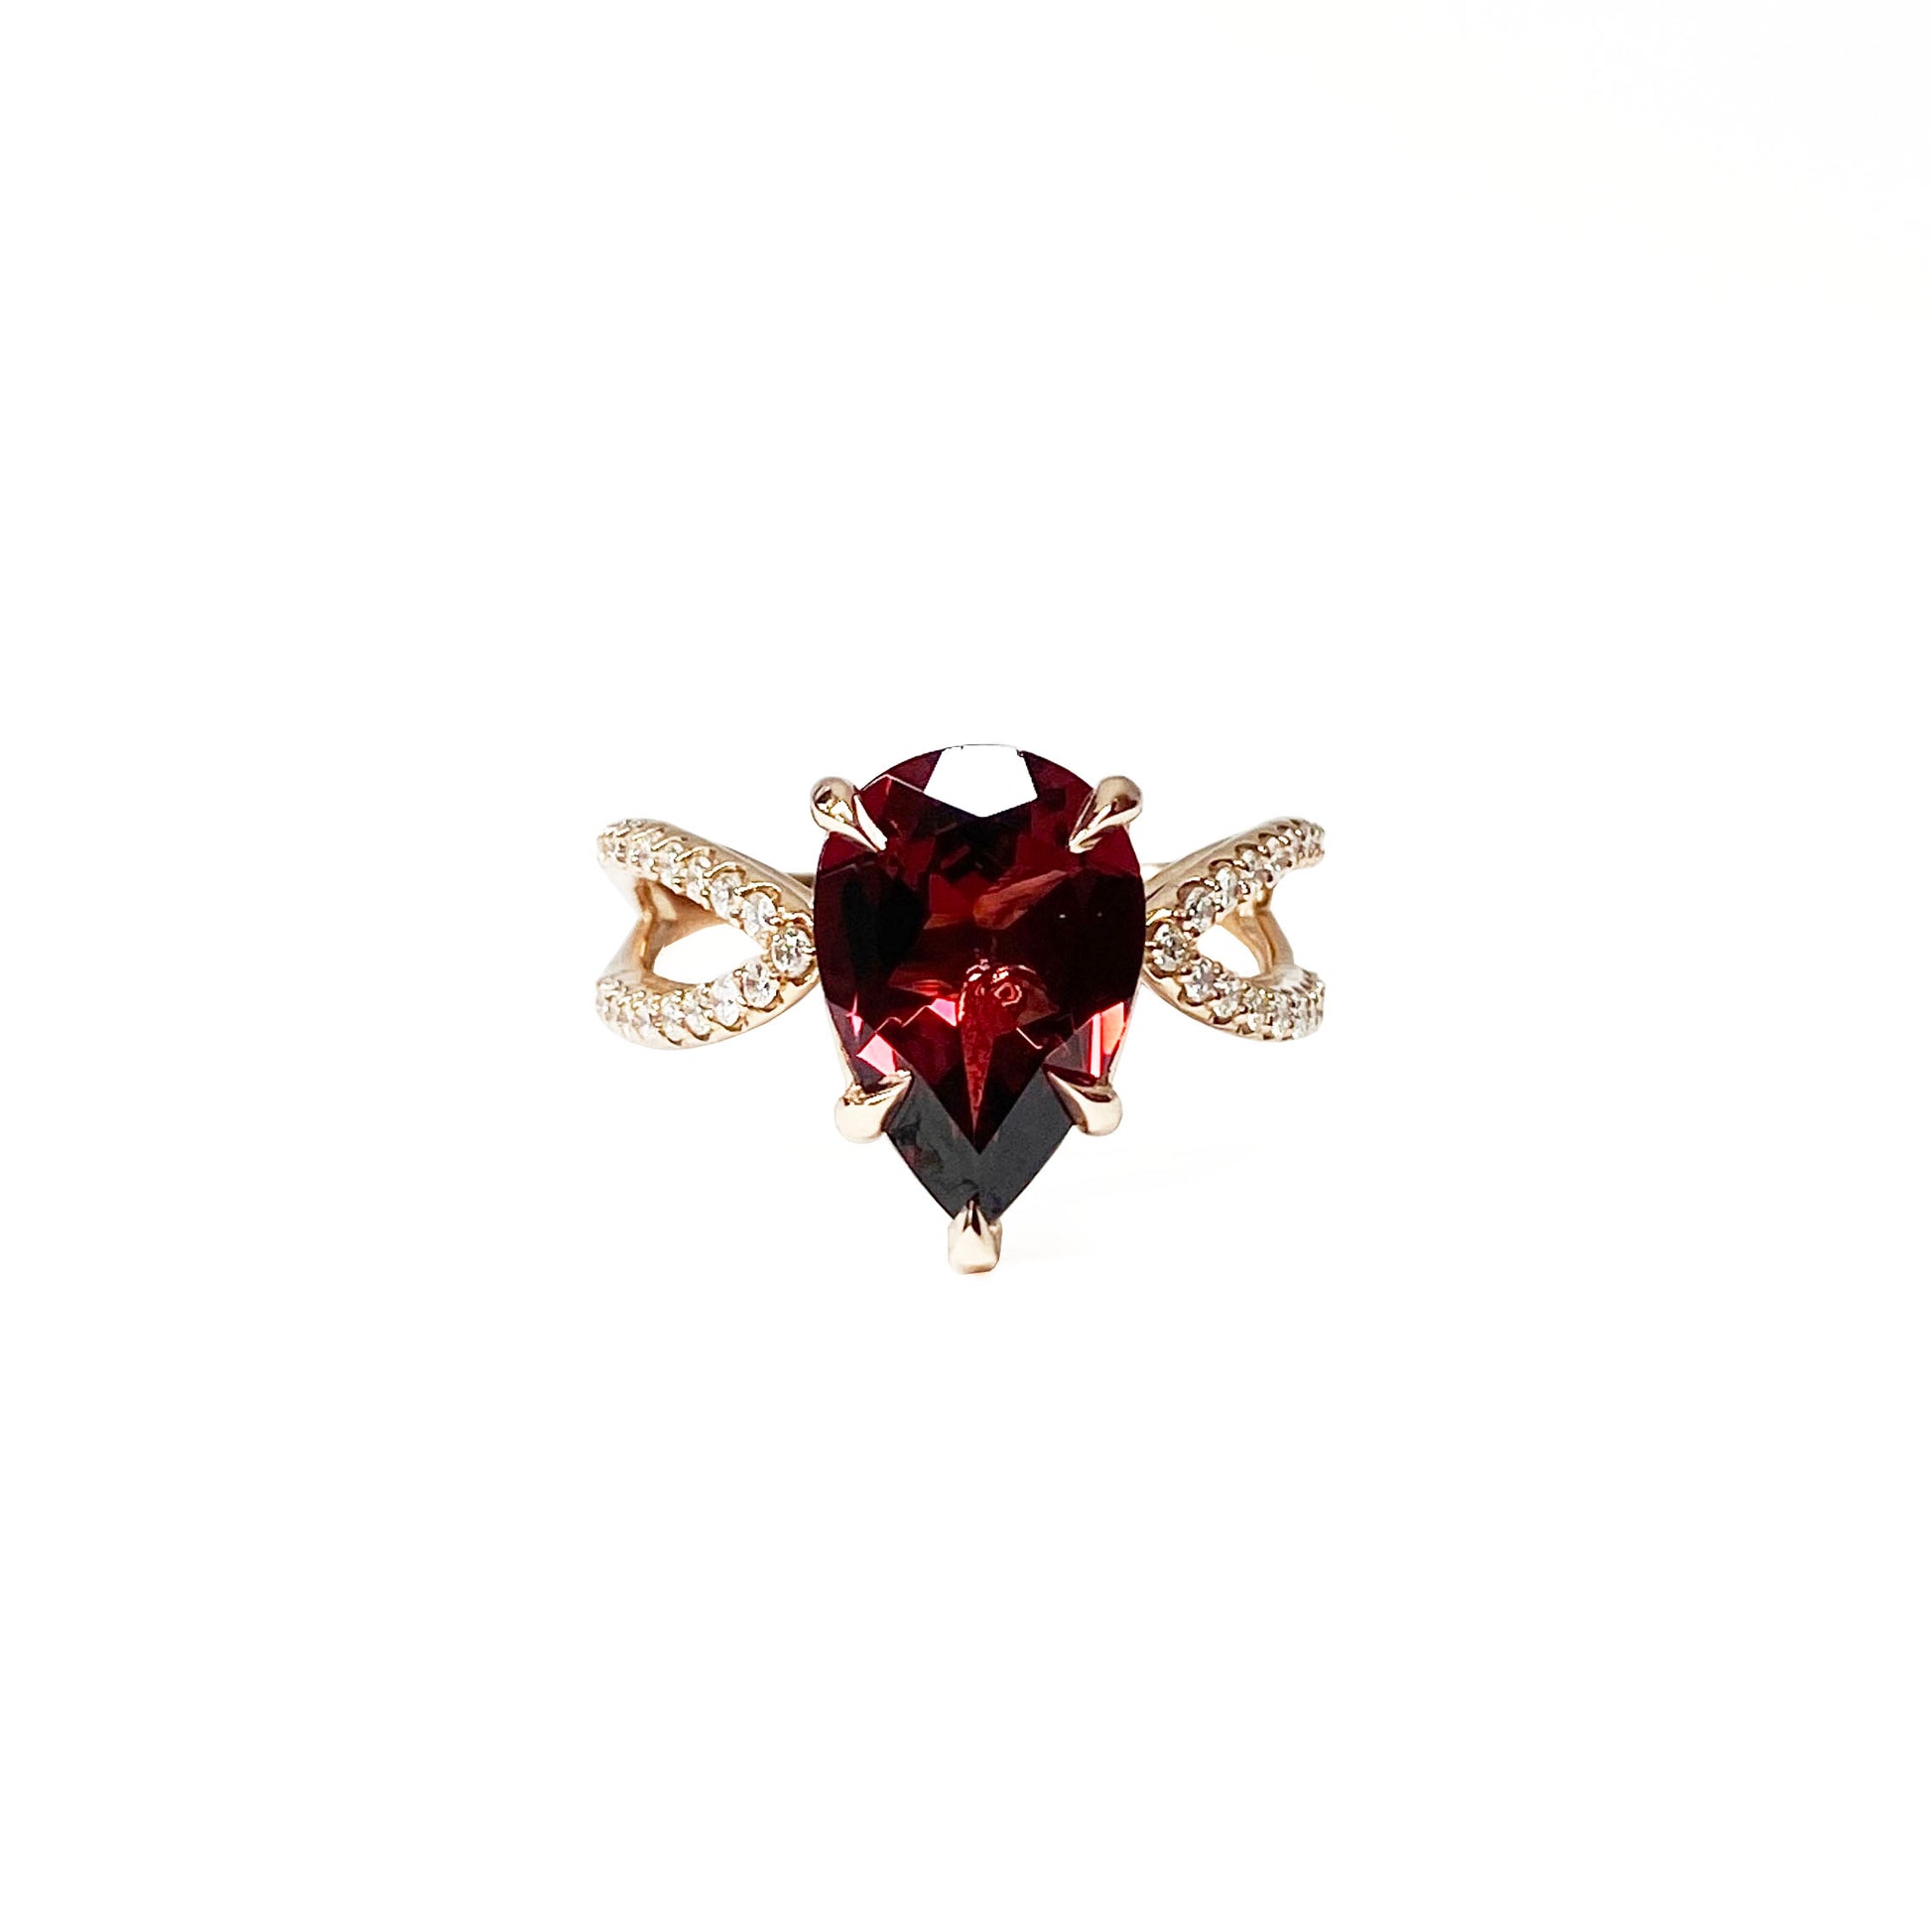 14k Rose Gold Garnet and Diamonds Ring - eklektic jewelry studio